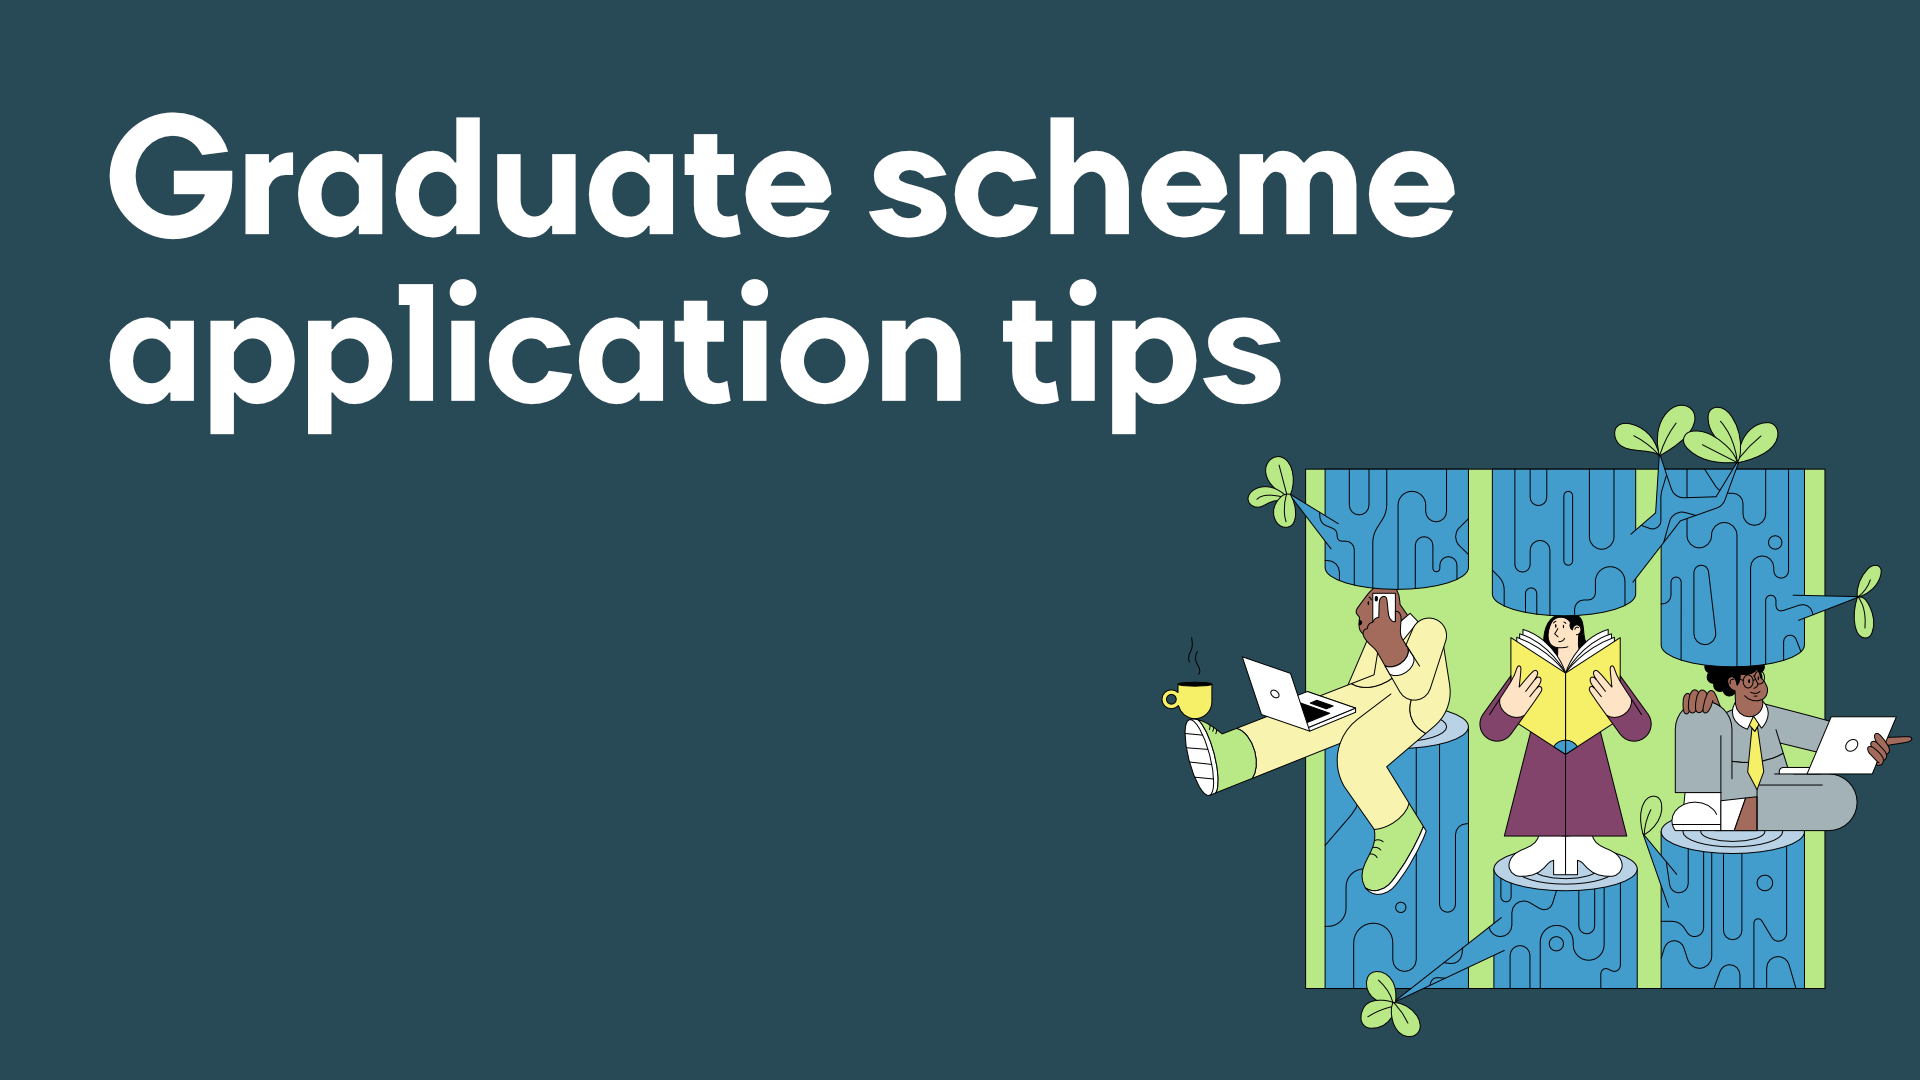 Graduate scheme application tips